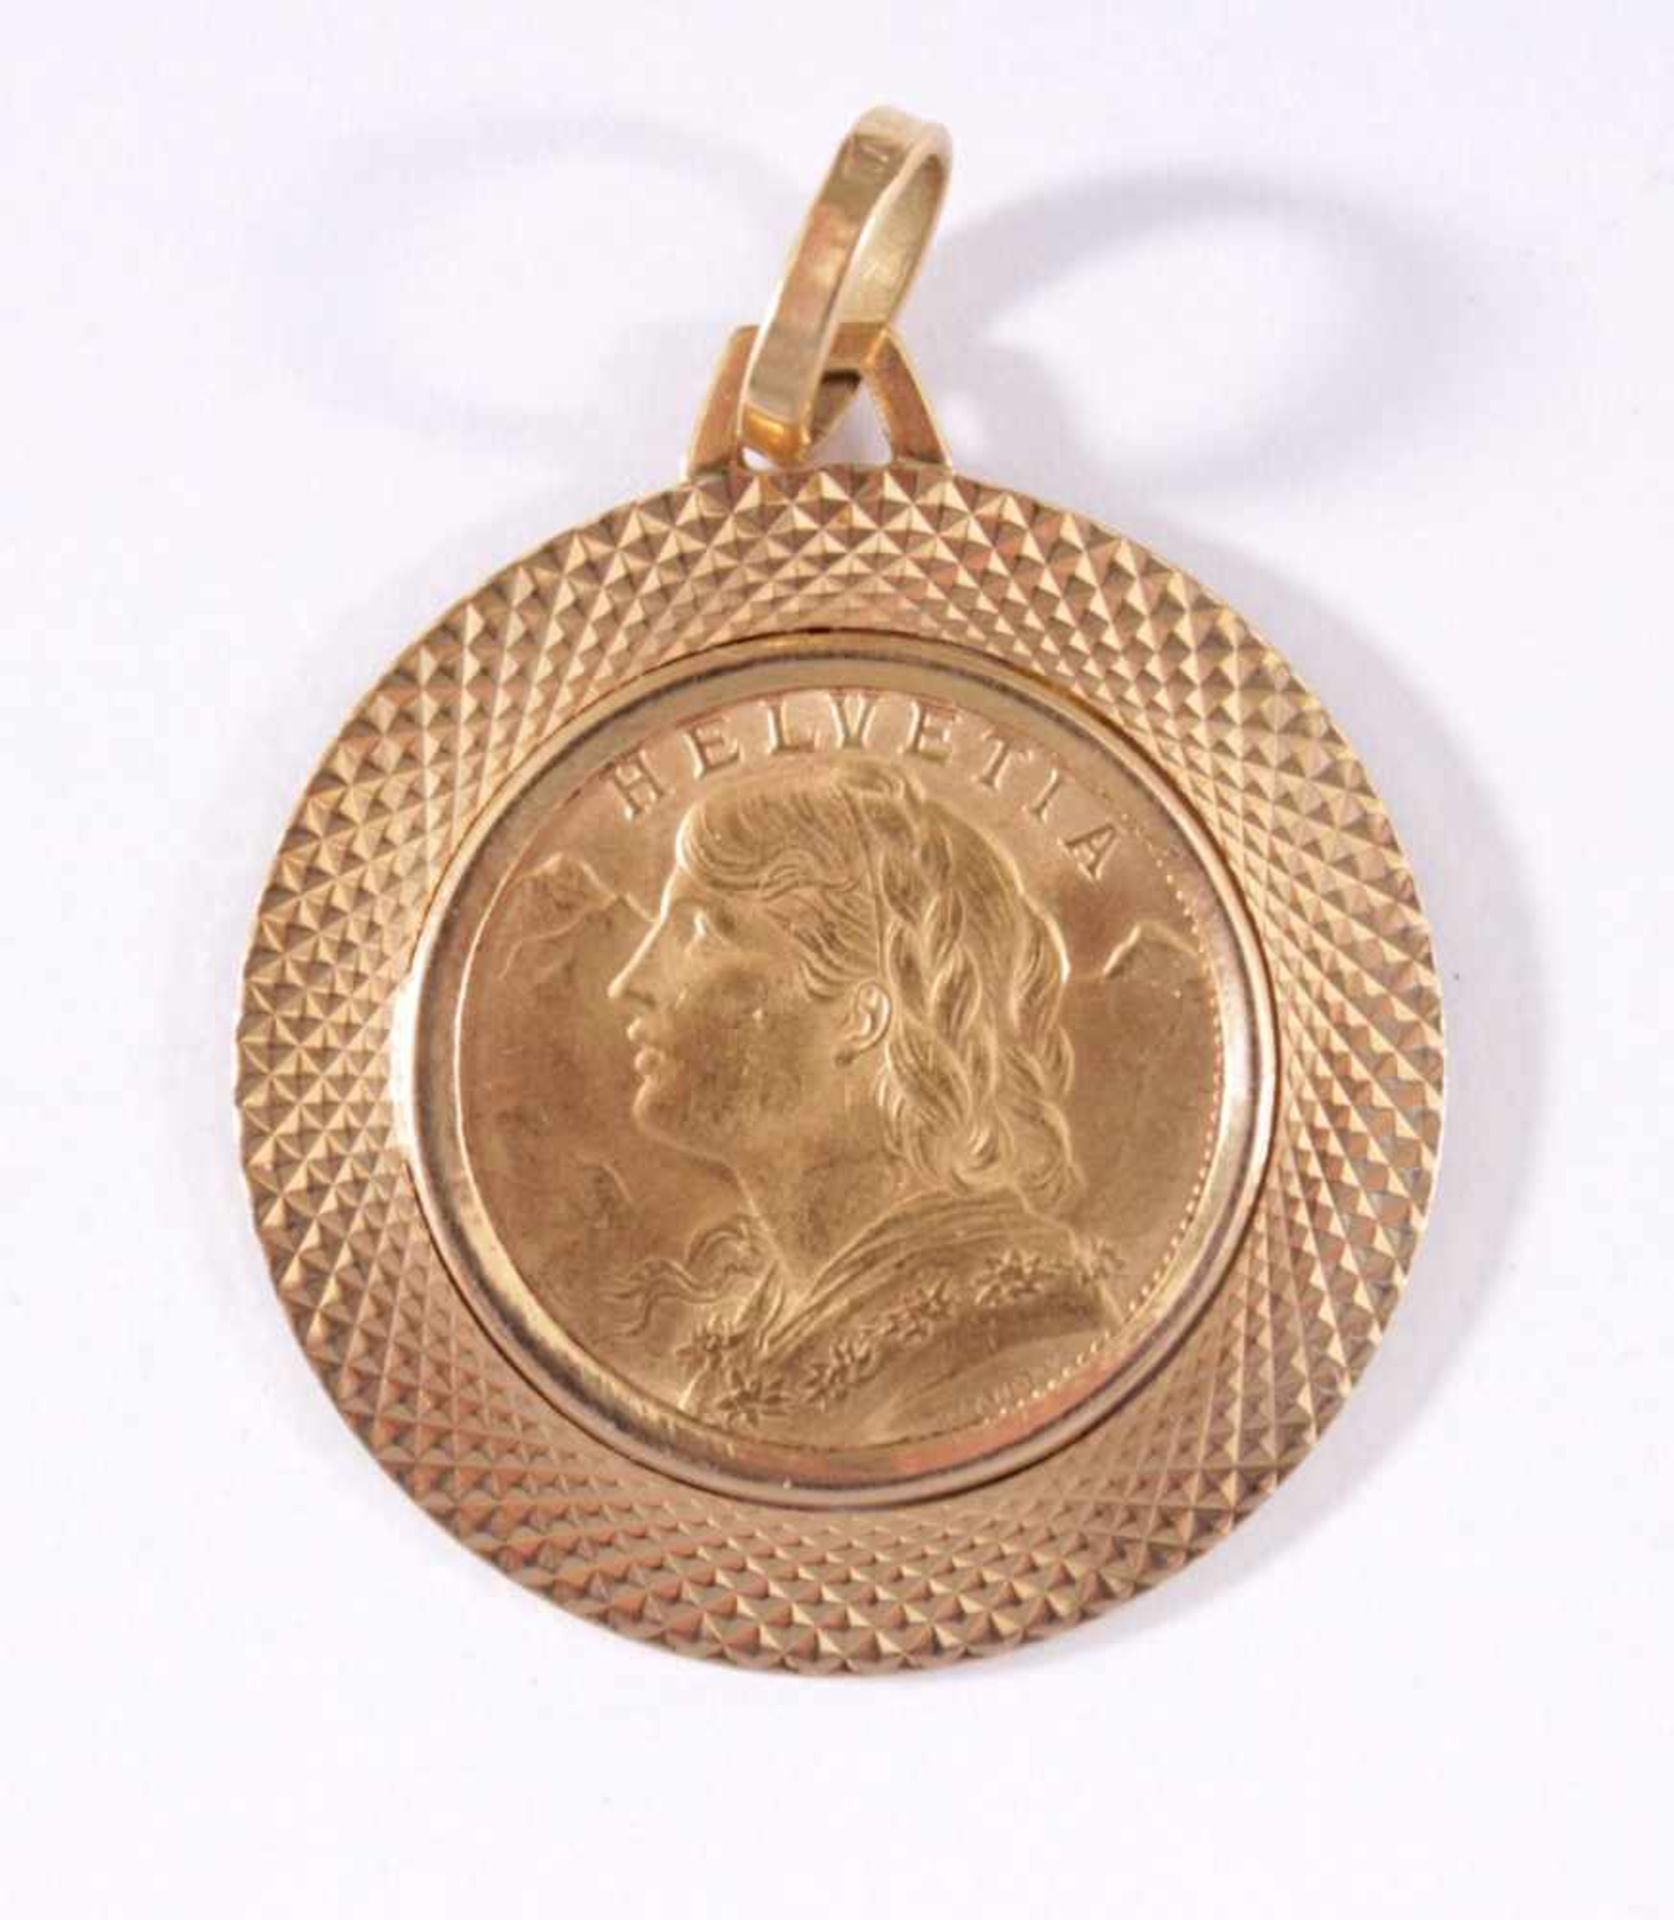 Anhänger mit Münze, Vreneli 20 Franken Gold v. 1947900/000 Goldmünze, Fassung 750/000 GG, ca. D- 3,1